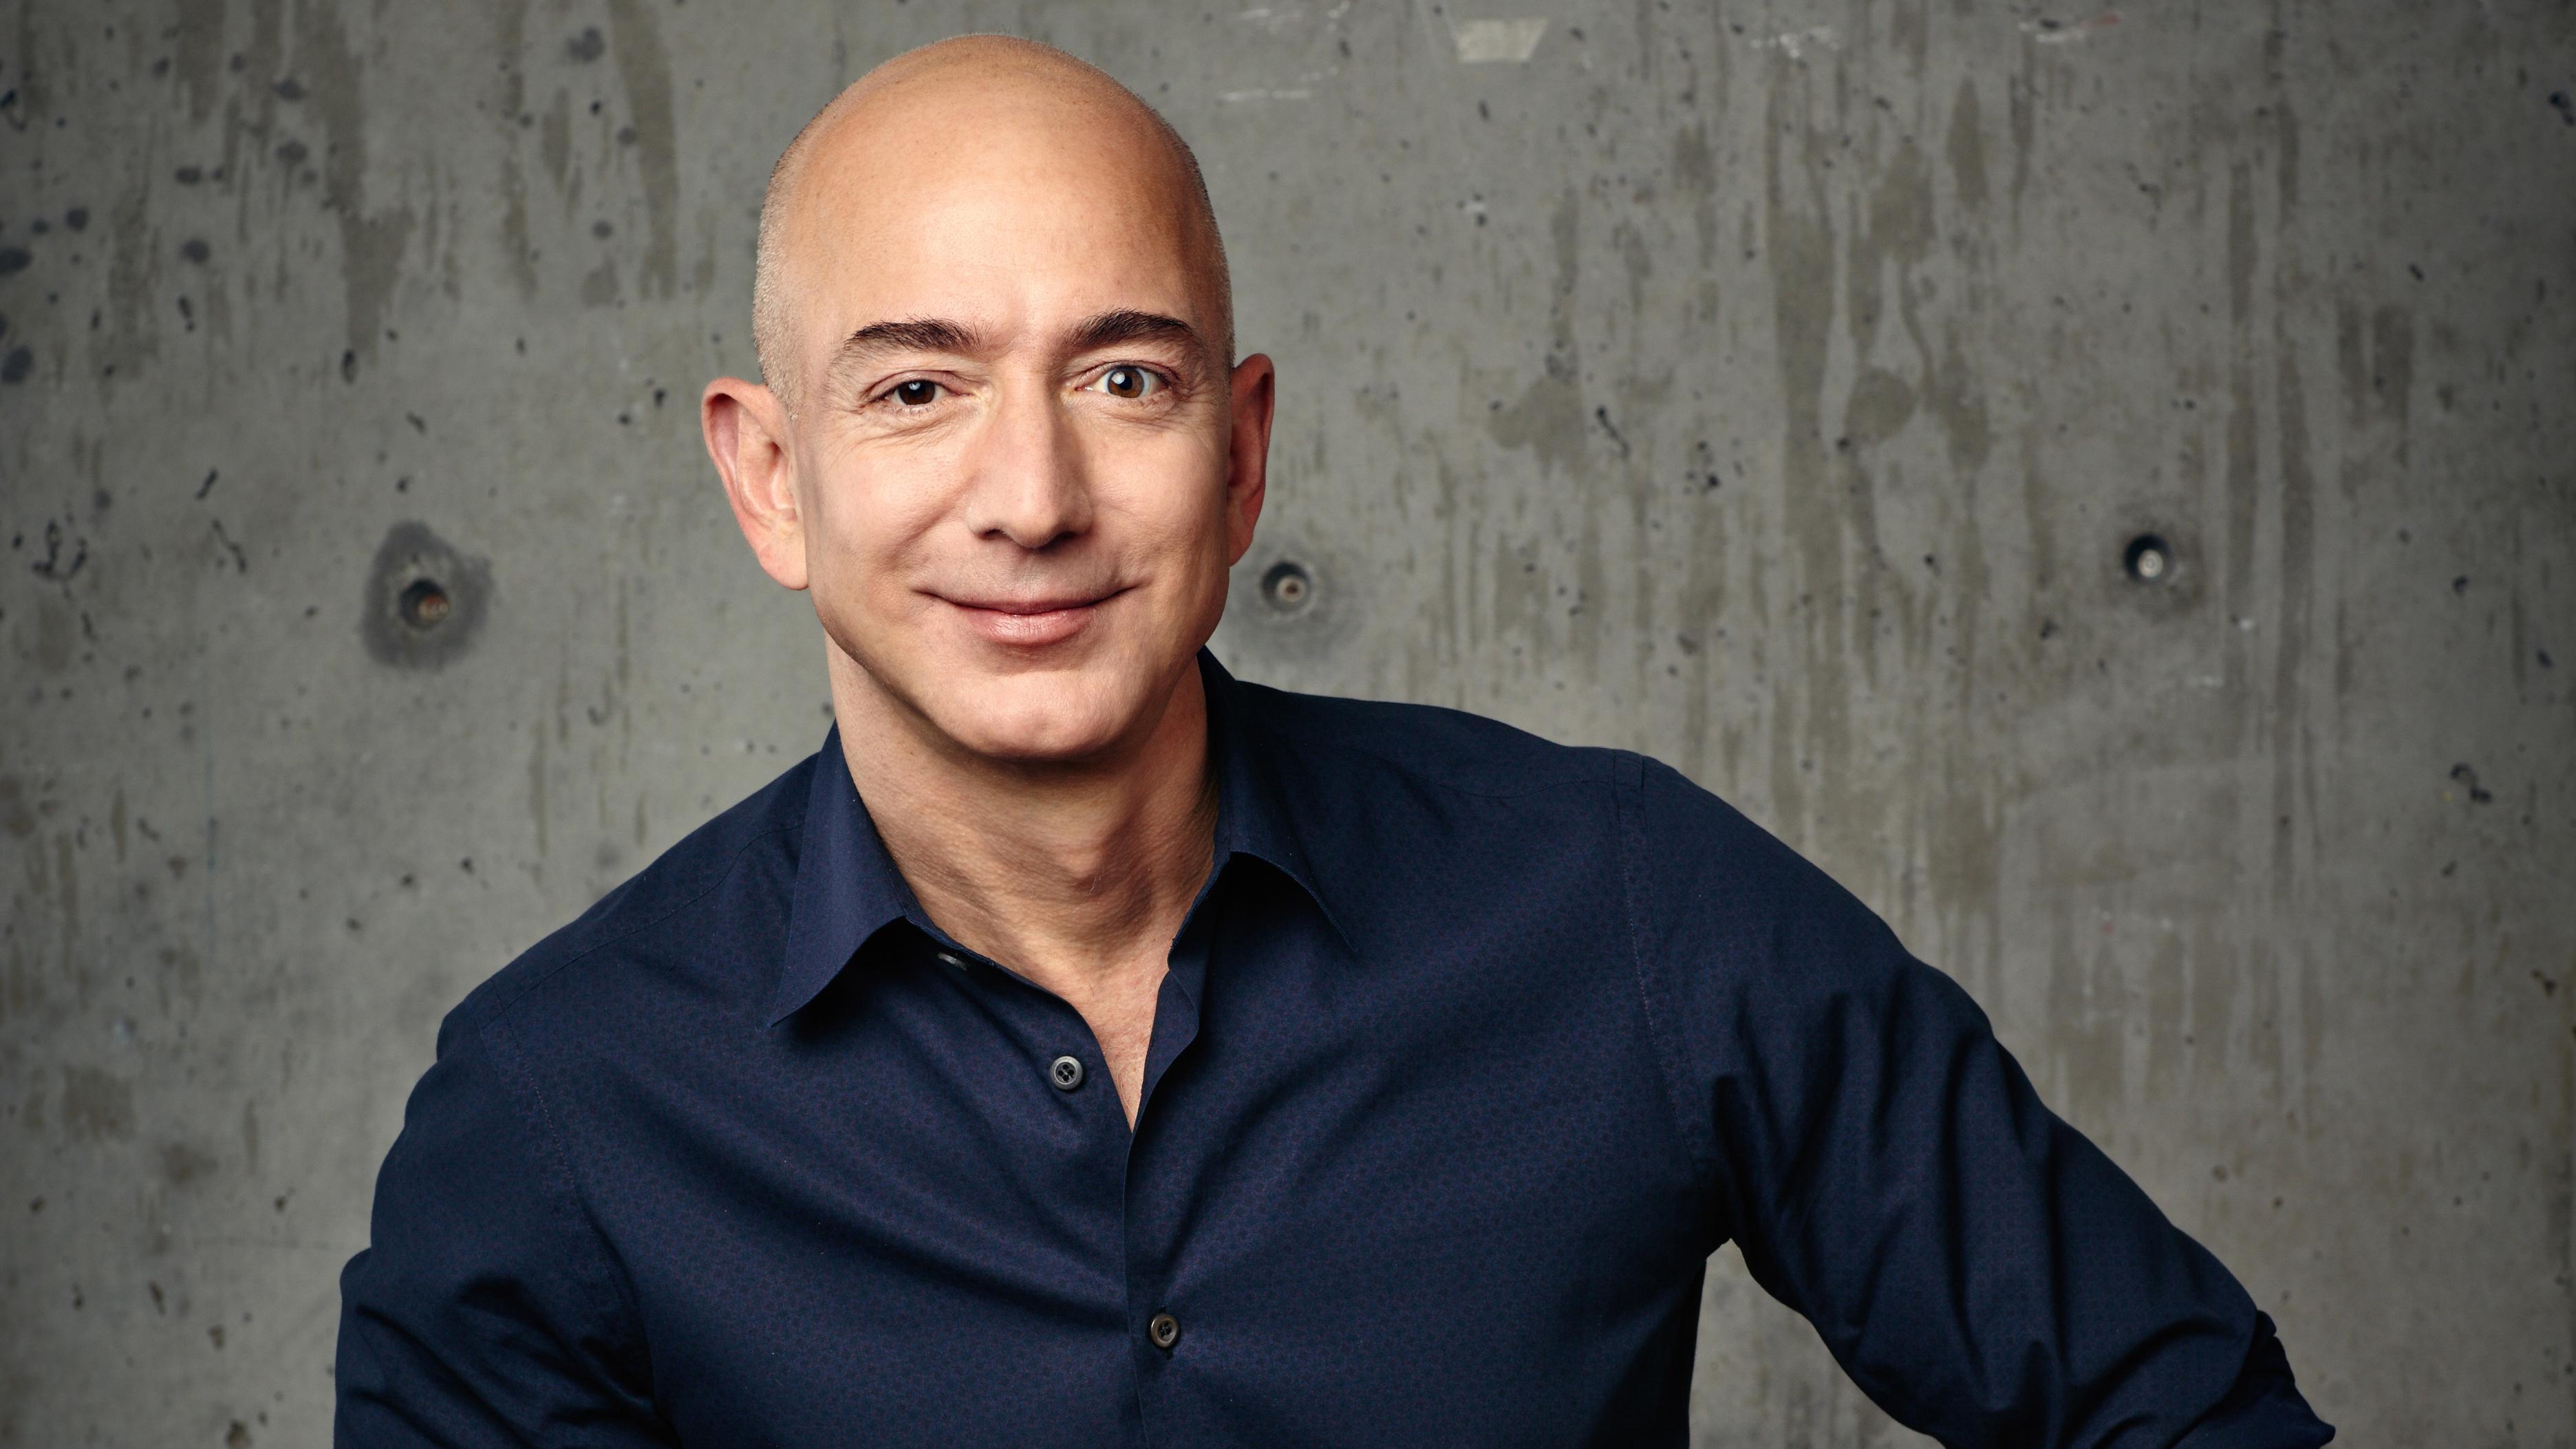 Jeff Bezos, HD Celebrities, 4k Wallpapers, Image, Backgrounds